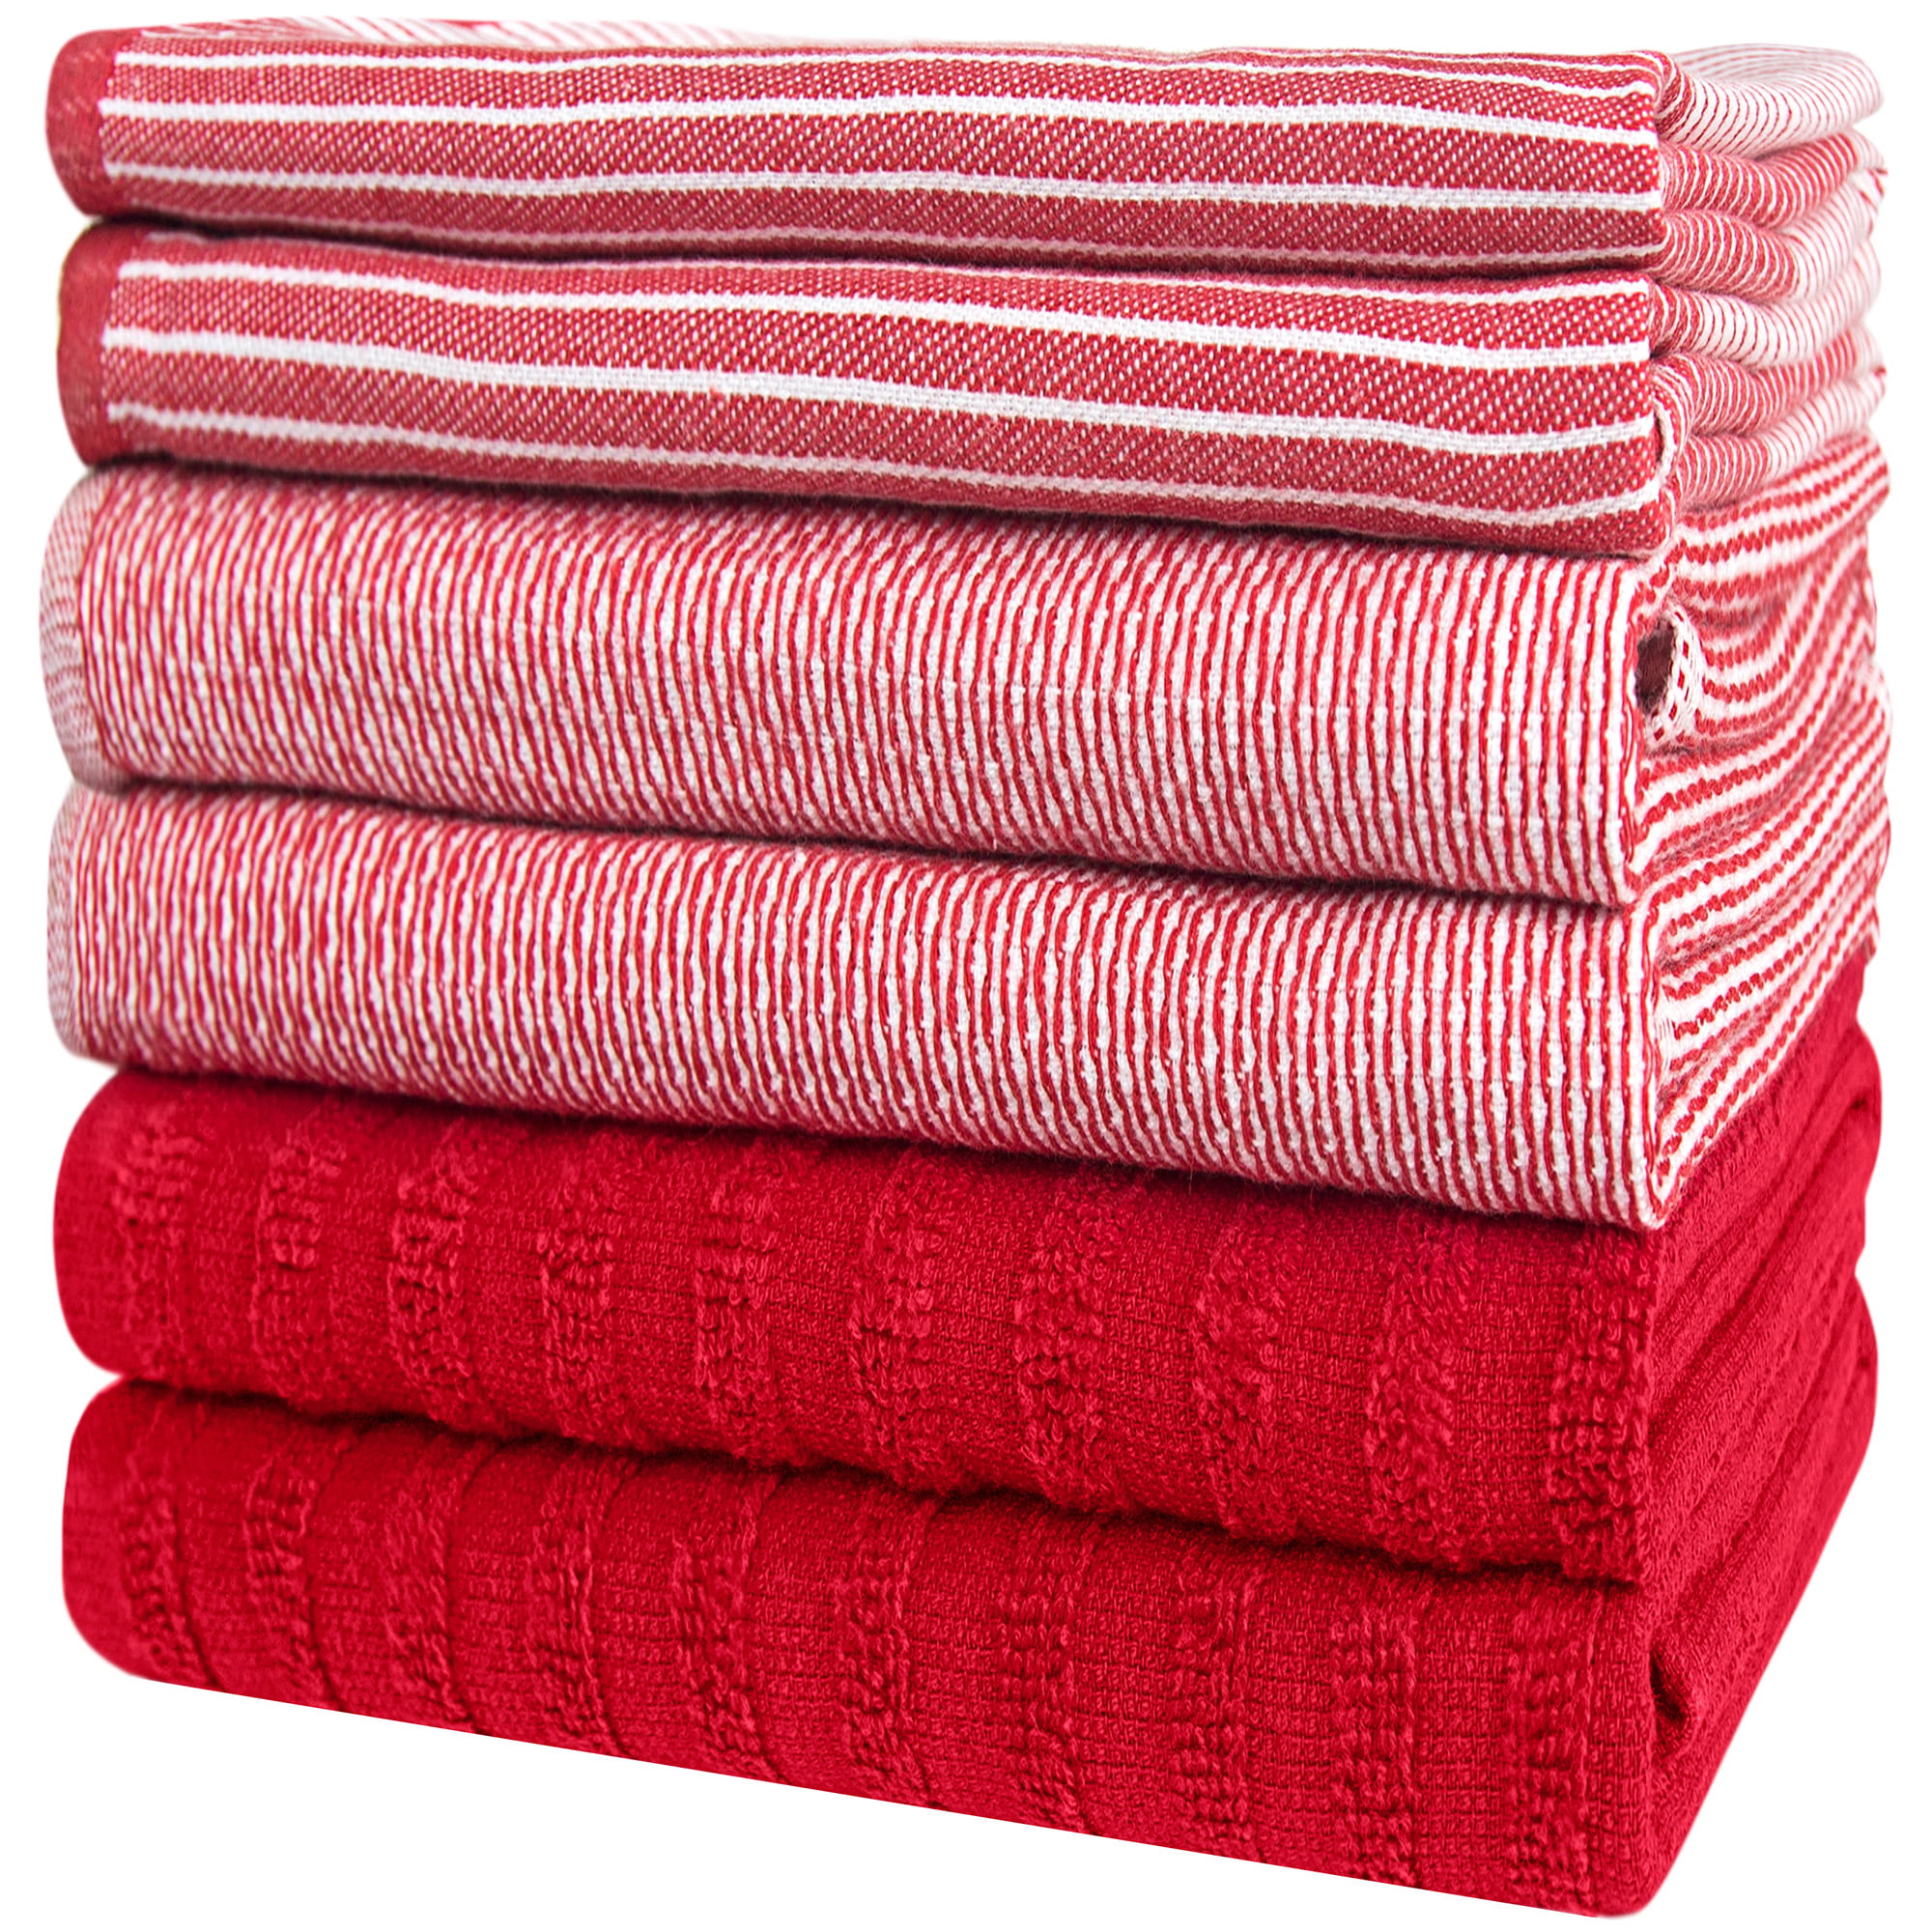 Urban Villa Kitchen Towels Aqua Multi Dobby Stripes Premium Quality 100%  Cotton Dish Towels Mitered Corners Ultra Soft Size 20x30 Inches Highly